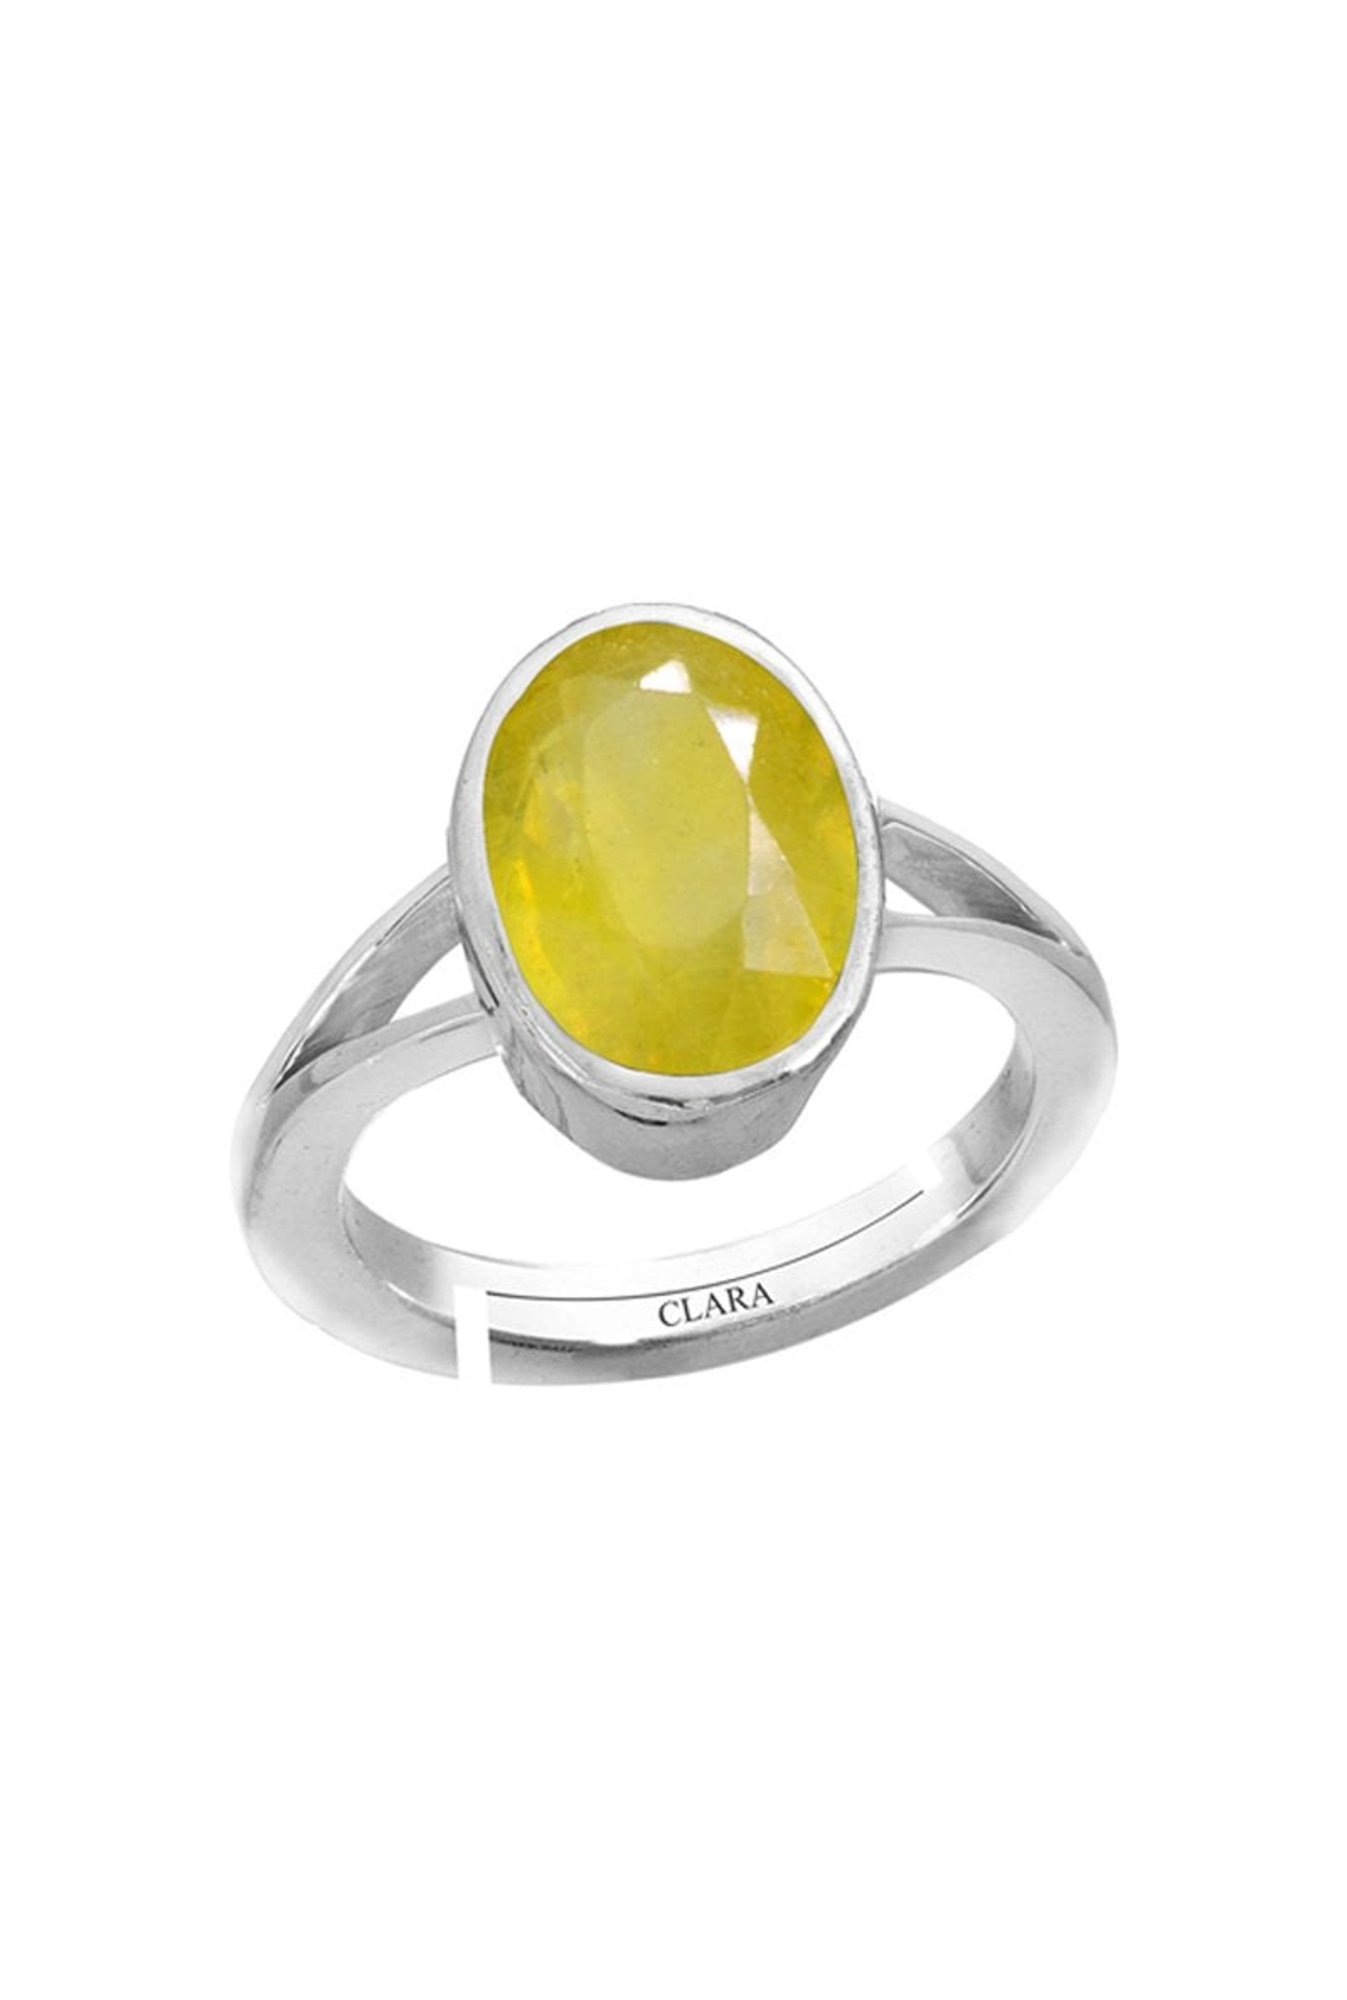 8.50 Carat Certified Natural Unheated Untreated Ceylon Yellow Sapphire  Pukhraj Gemstone Handmade Solitaire Engagement Men's Ring - Walmart.com